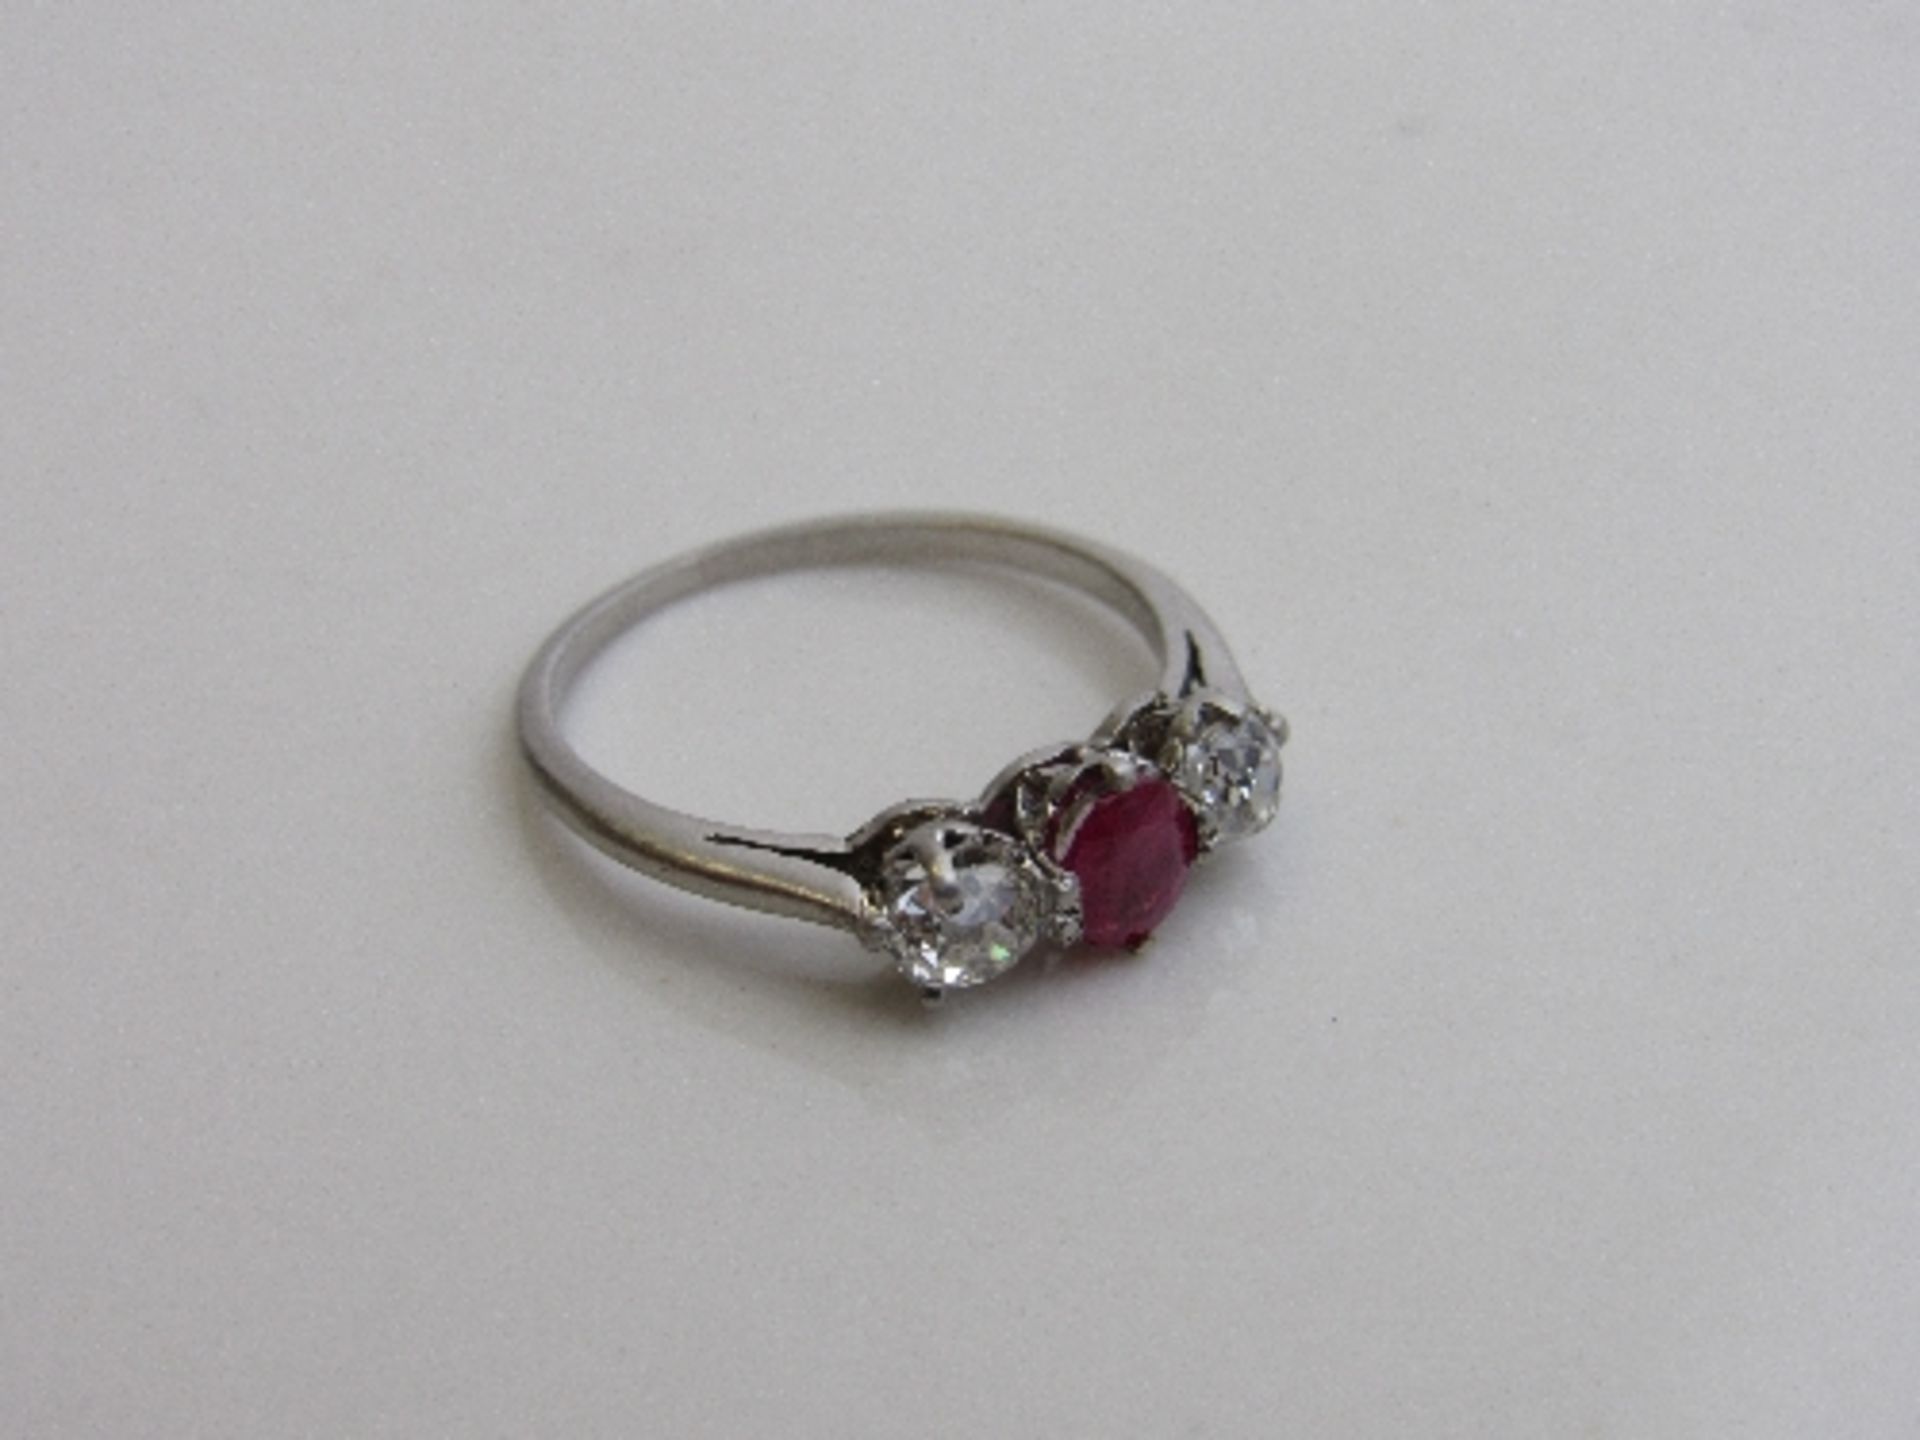 Platinum, diamond & ruby ring, size J 1/2, weight 2.3gms. Estimate £450-480